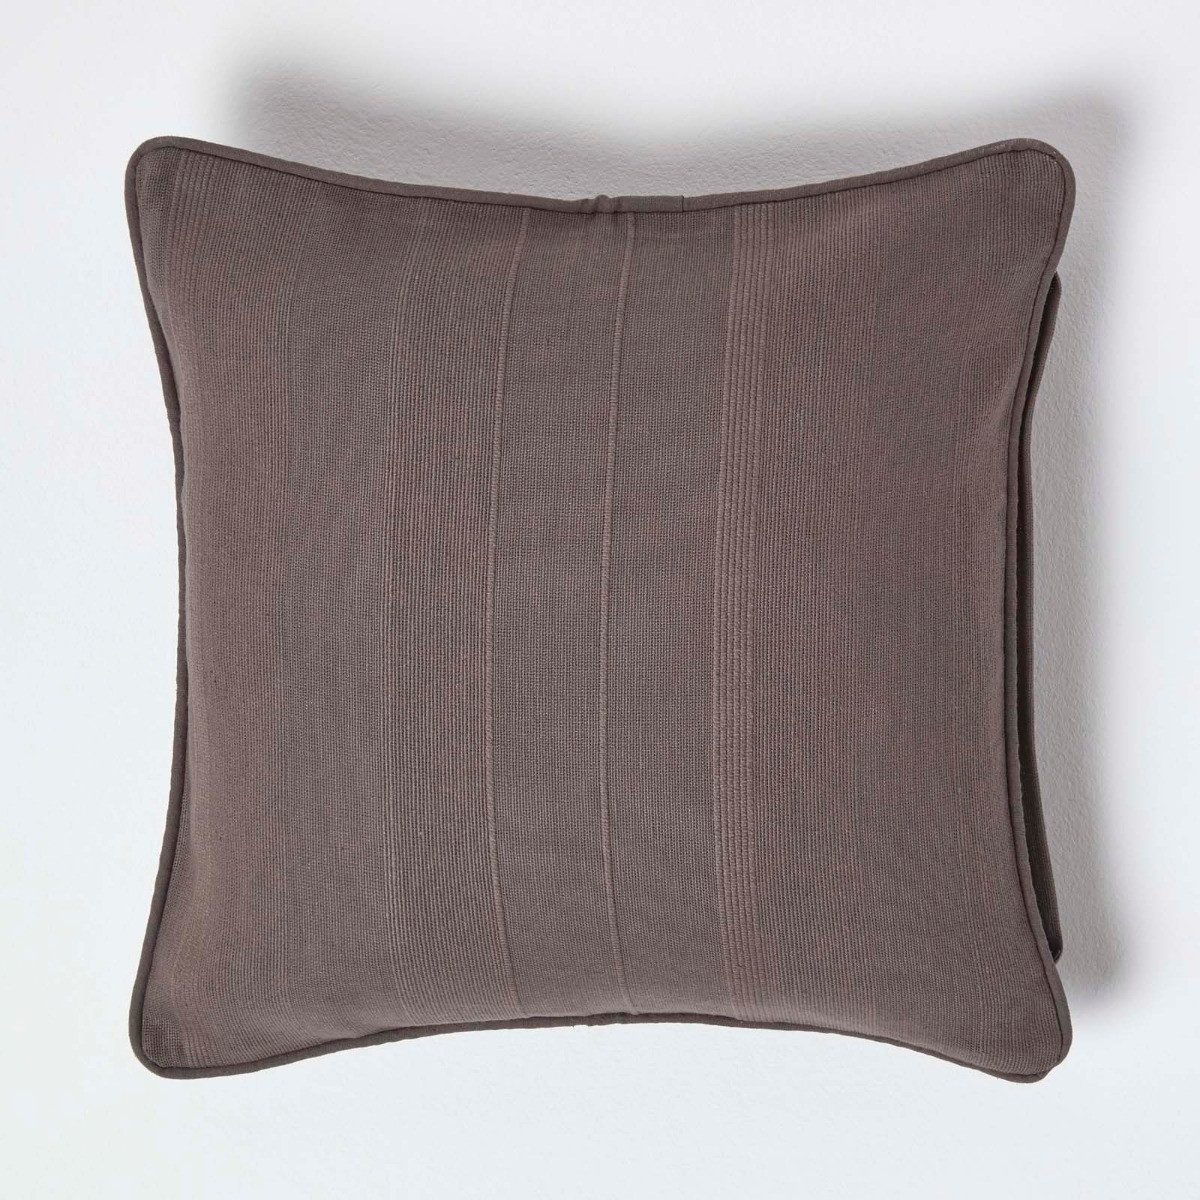 Kissenhülle Kissenbezug Rajput aus Baumwolle, dunkelgrau, 45 x 45 cm, Homescapes